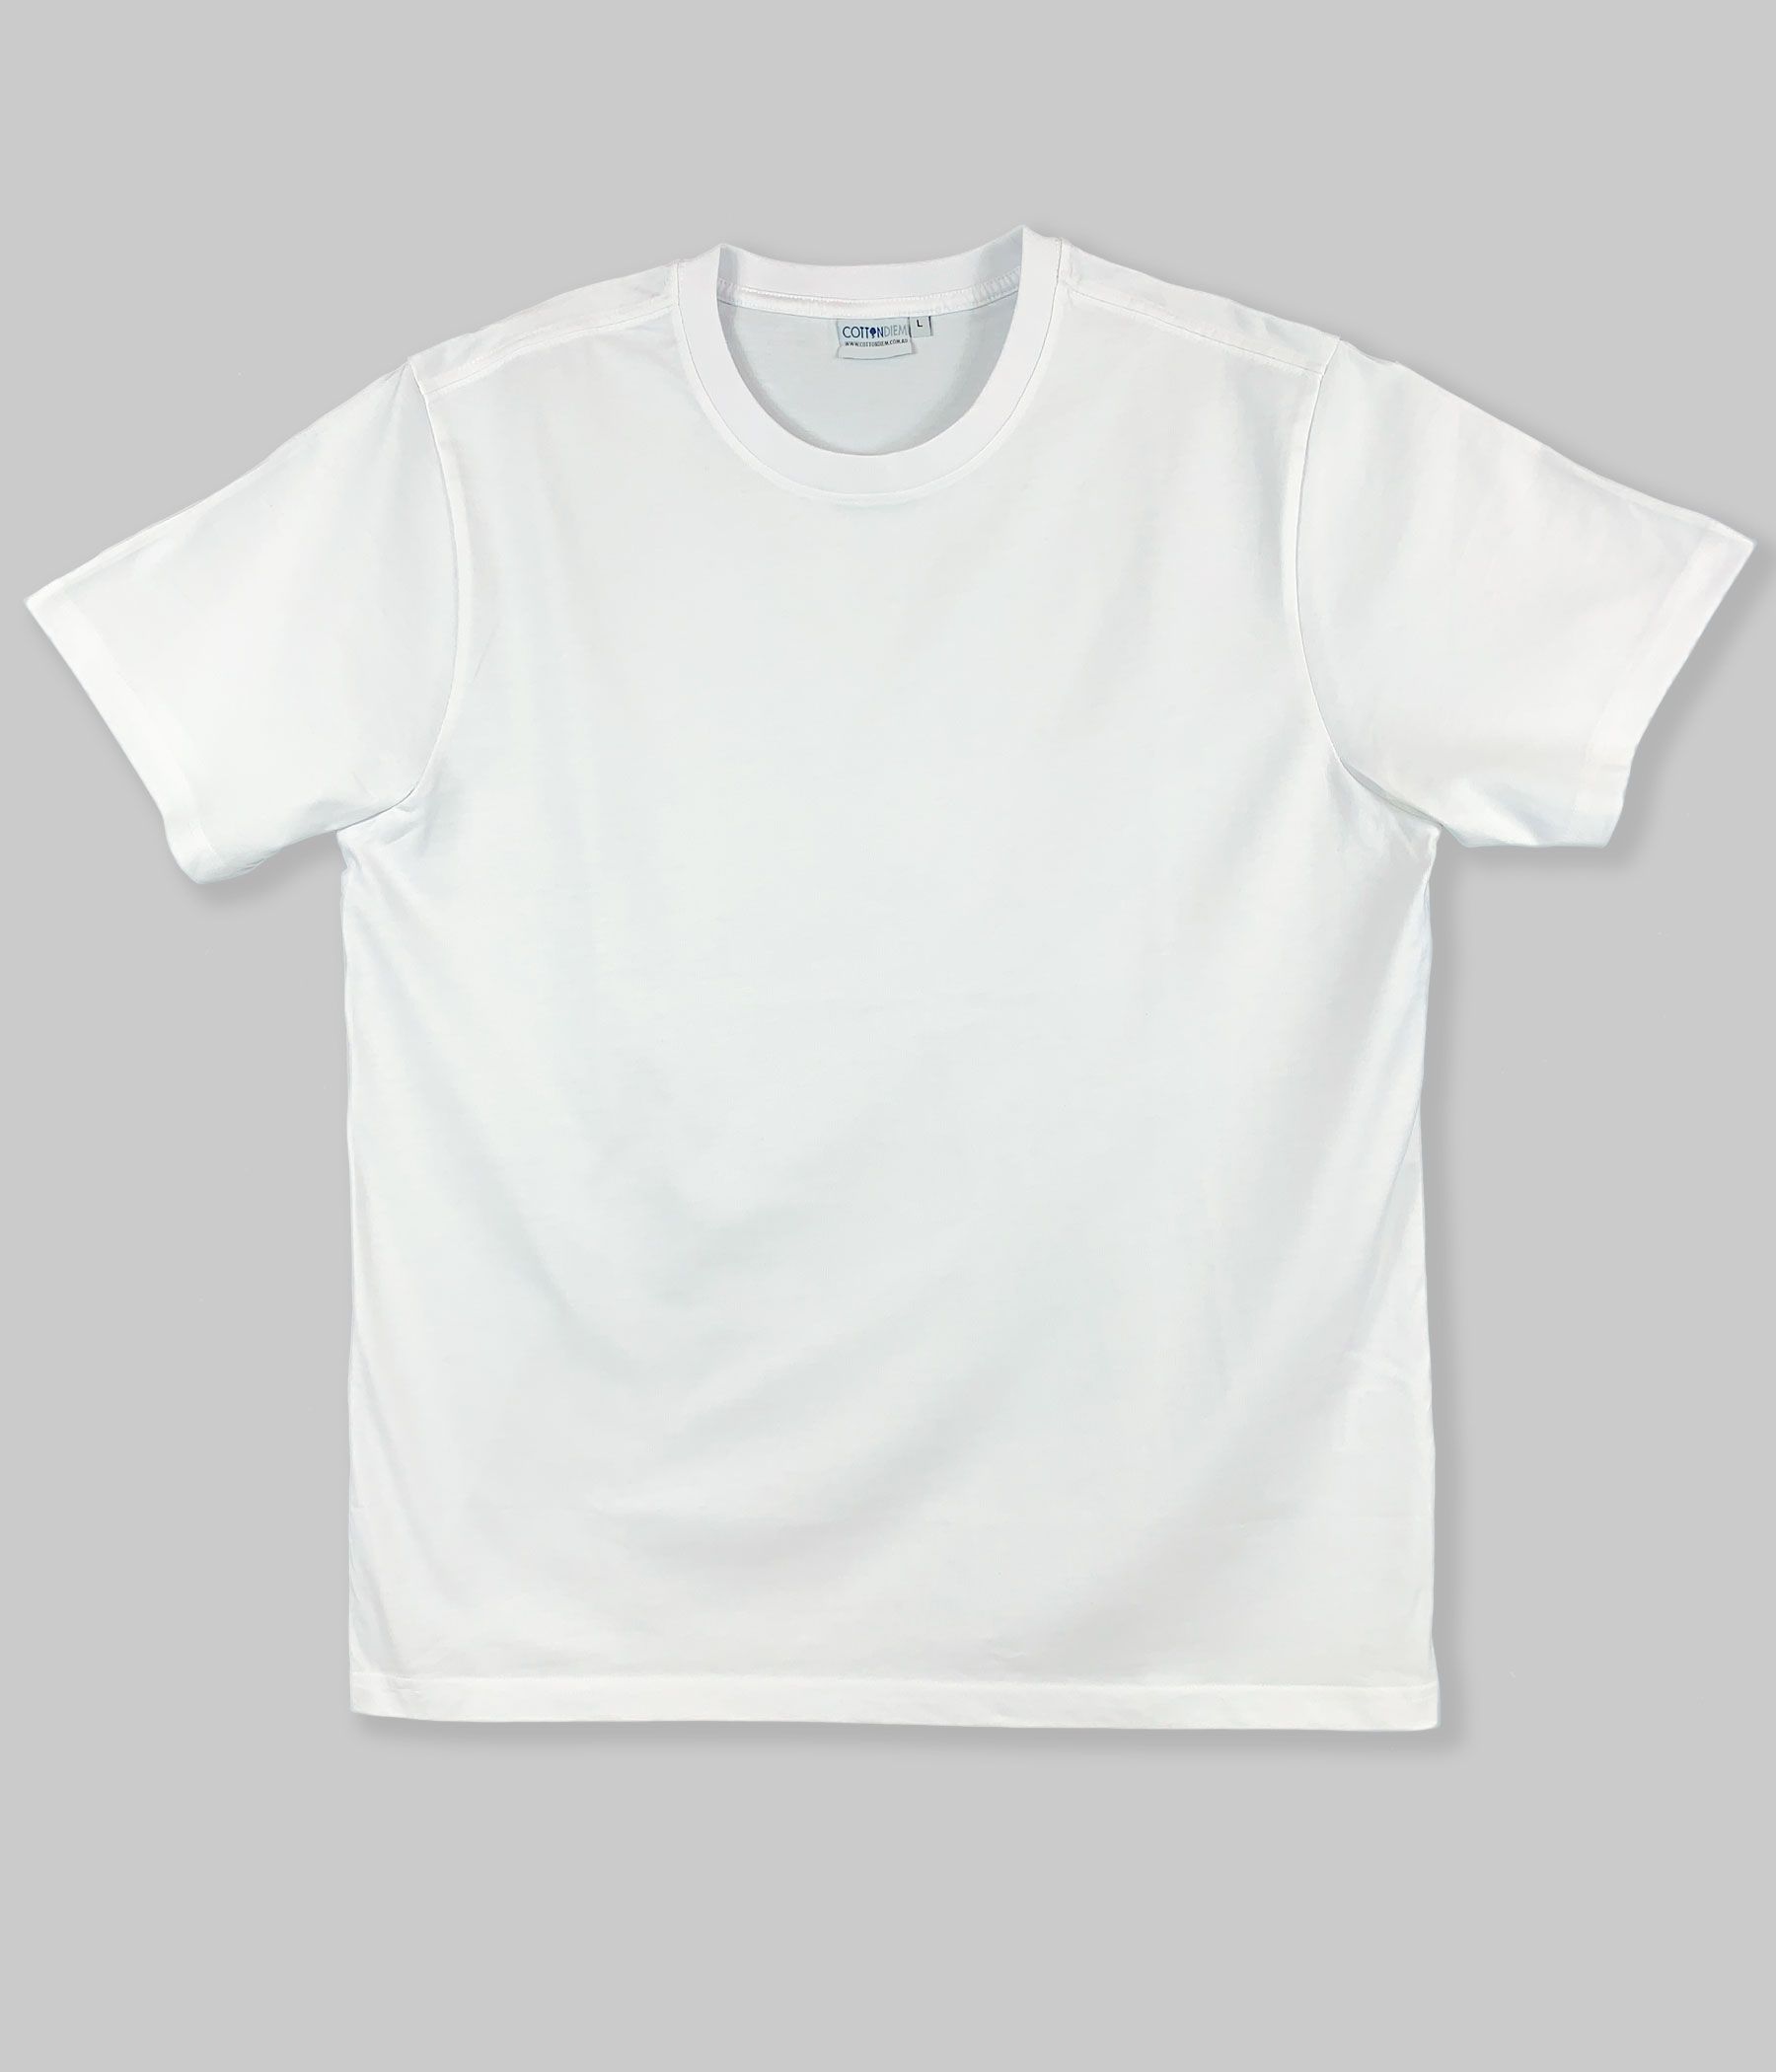 https://www.cottondiem.com.au/wp-content/uploads/blank-white-t-shirt-flat.jpg